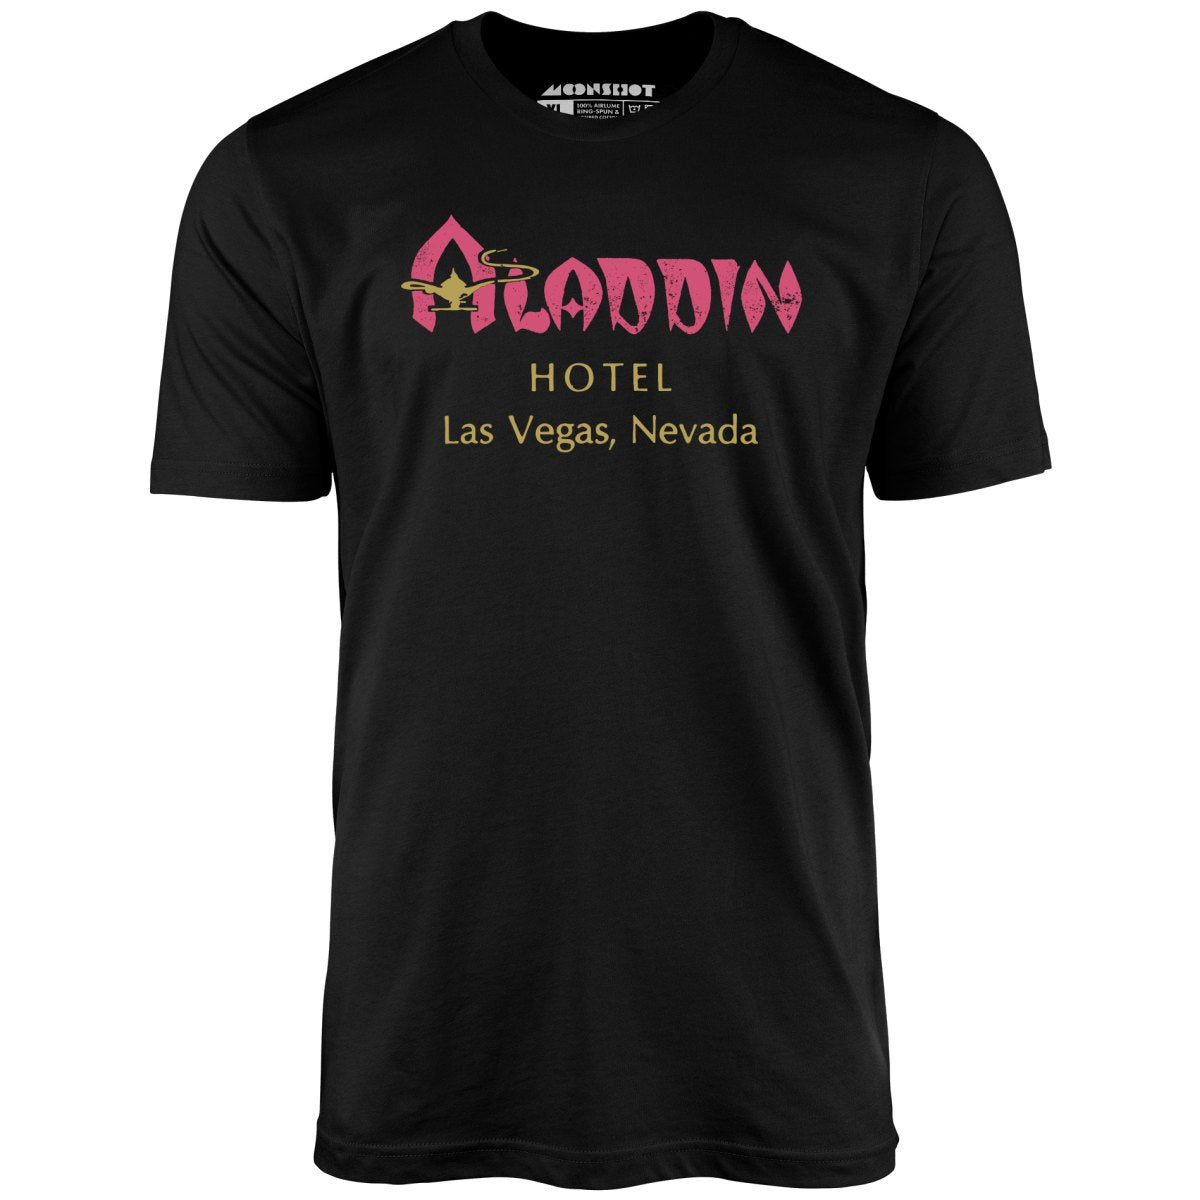 Aladdin Hotel - Vintage Las Vegas - Unisex T-Shirt